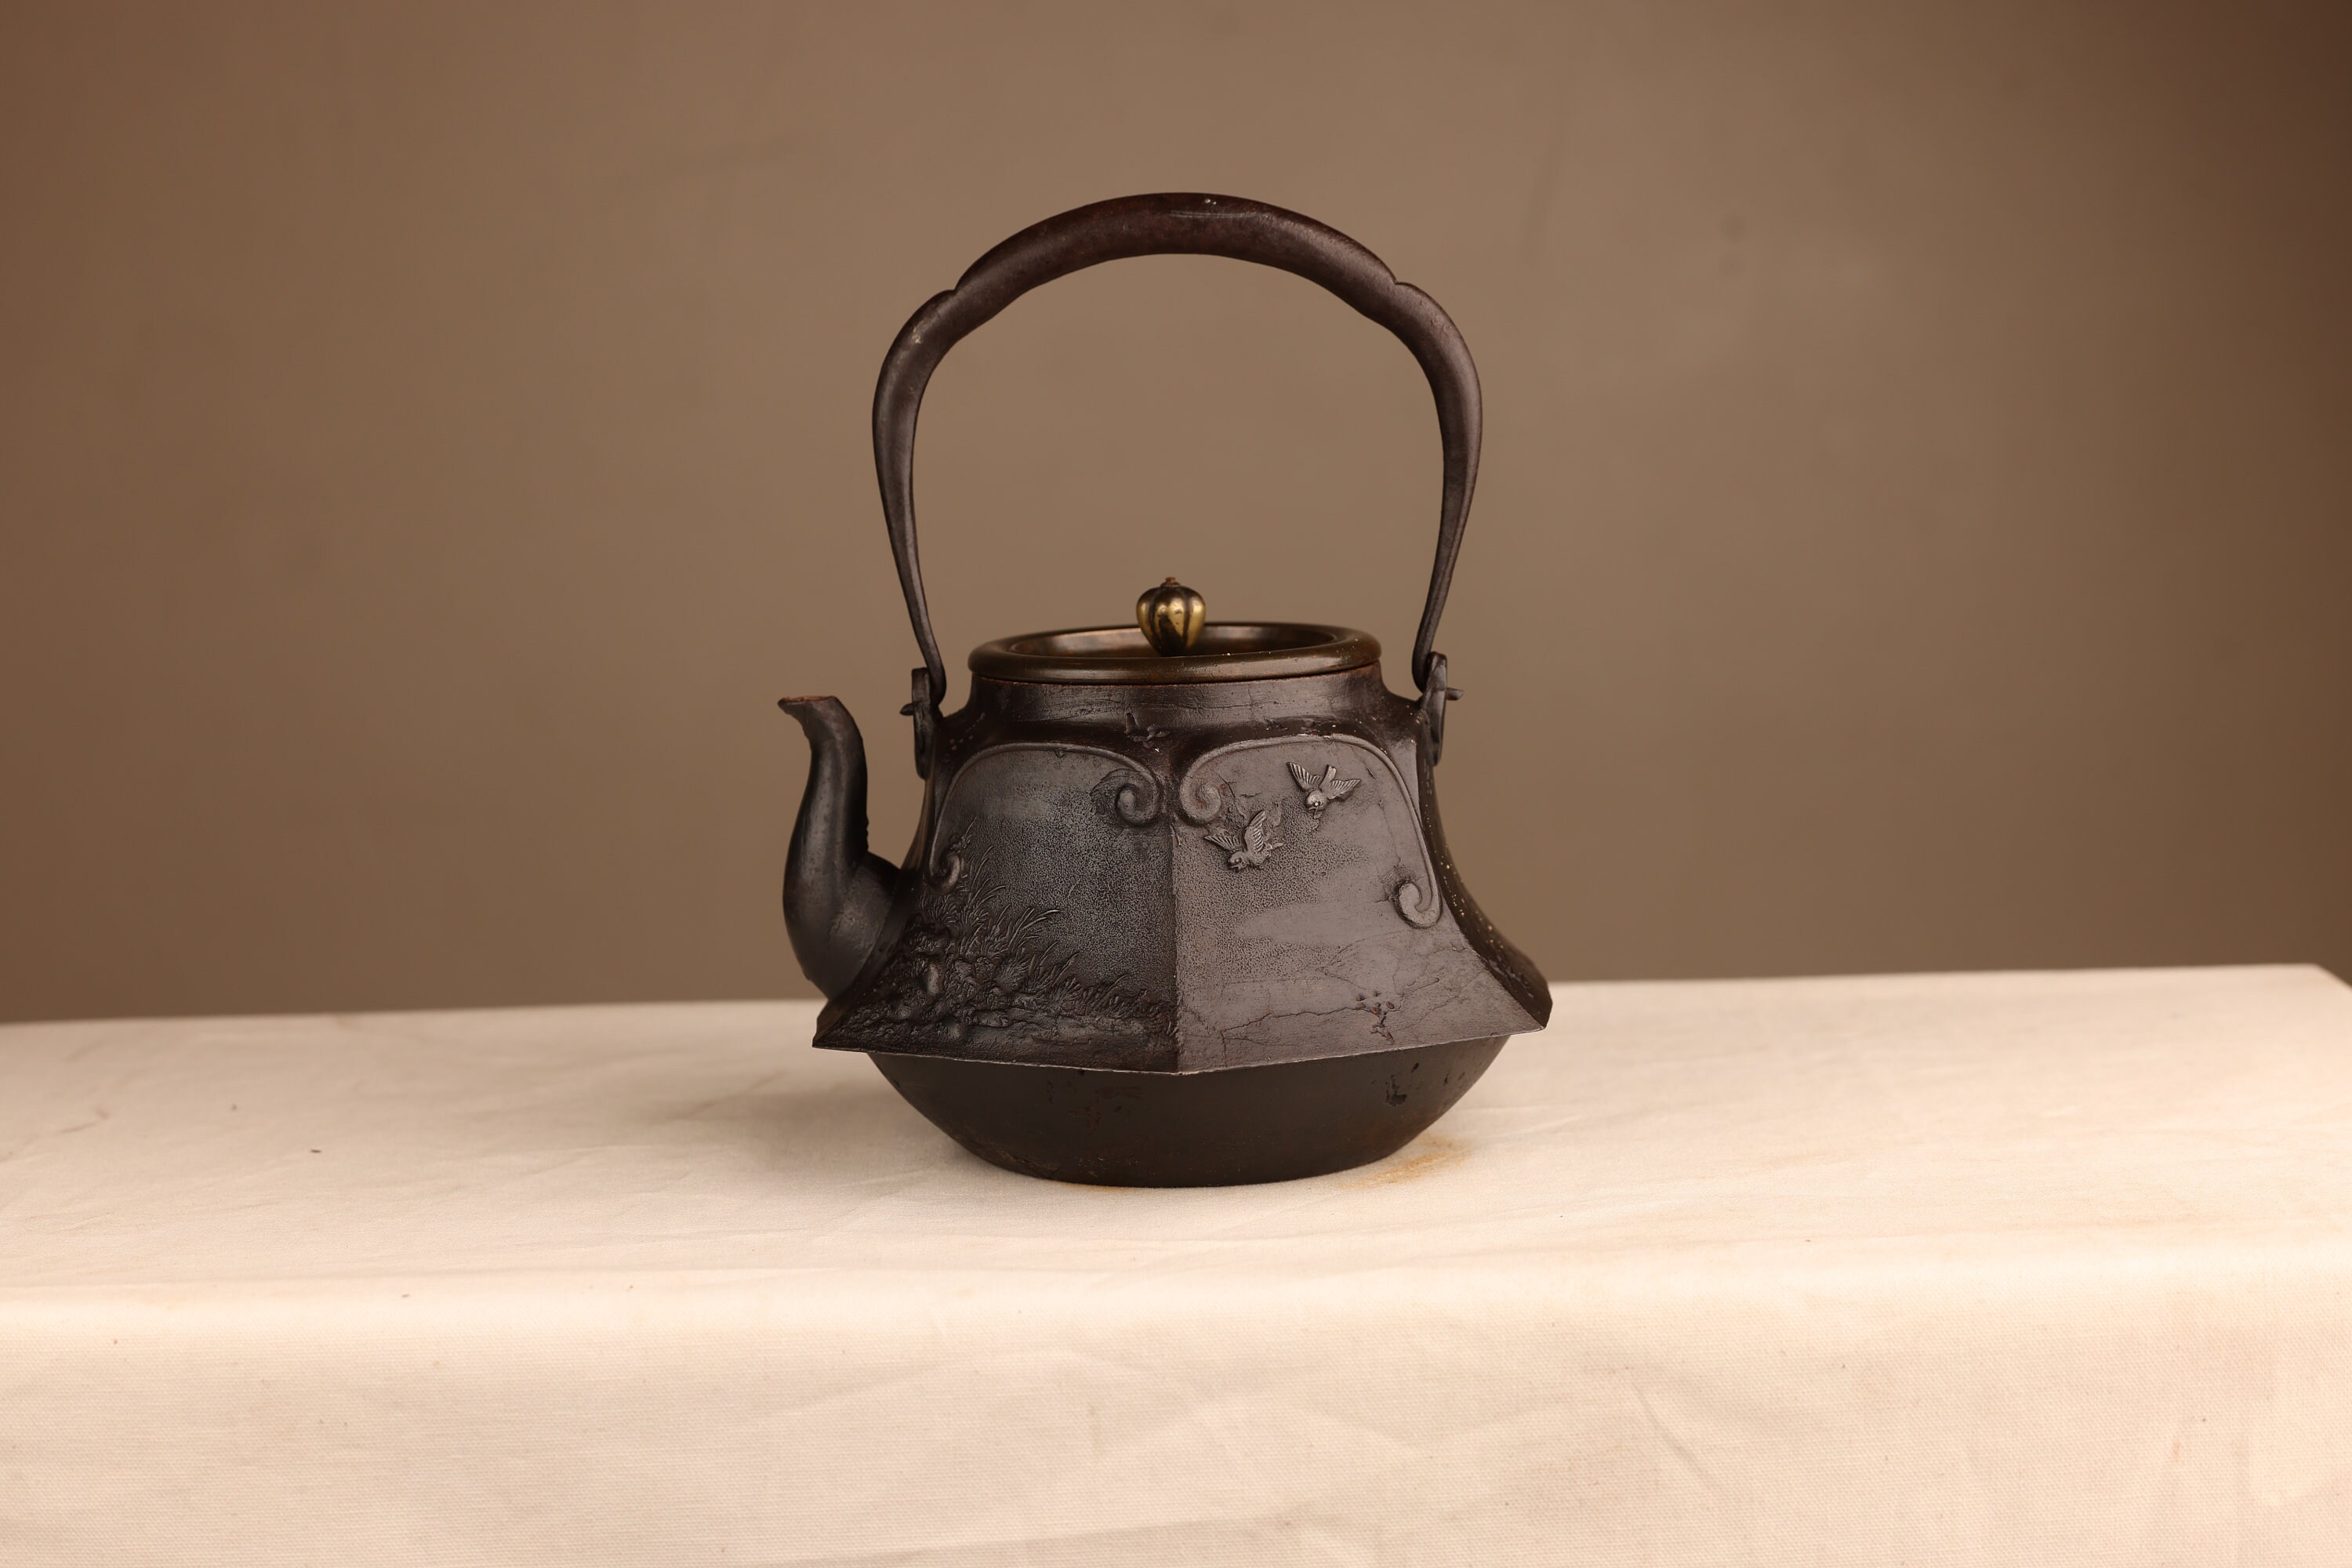 Tetsubin 43 oz Black Cast Iron Osaka Teapot - Wooden Handle and Knob - 7 1/2 inch x 6 inch x 5 inch - 1 Count Box